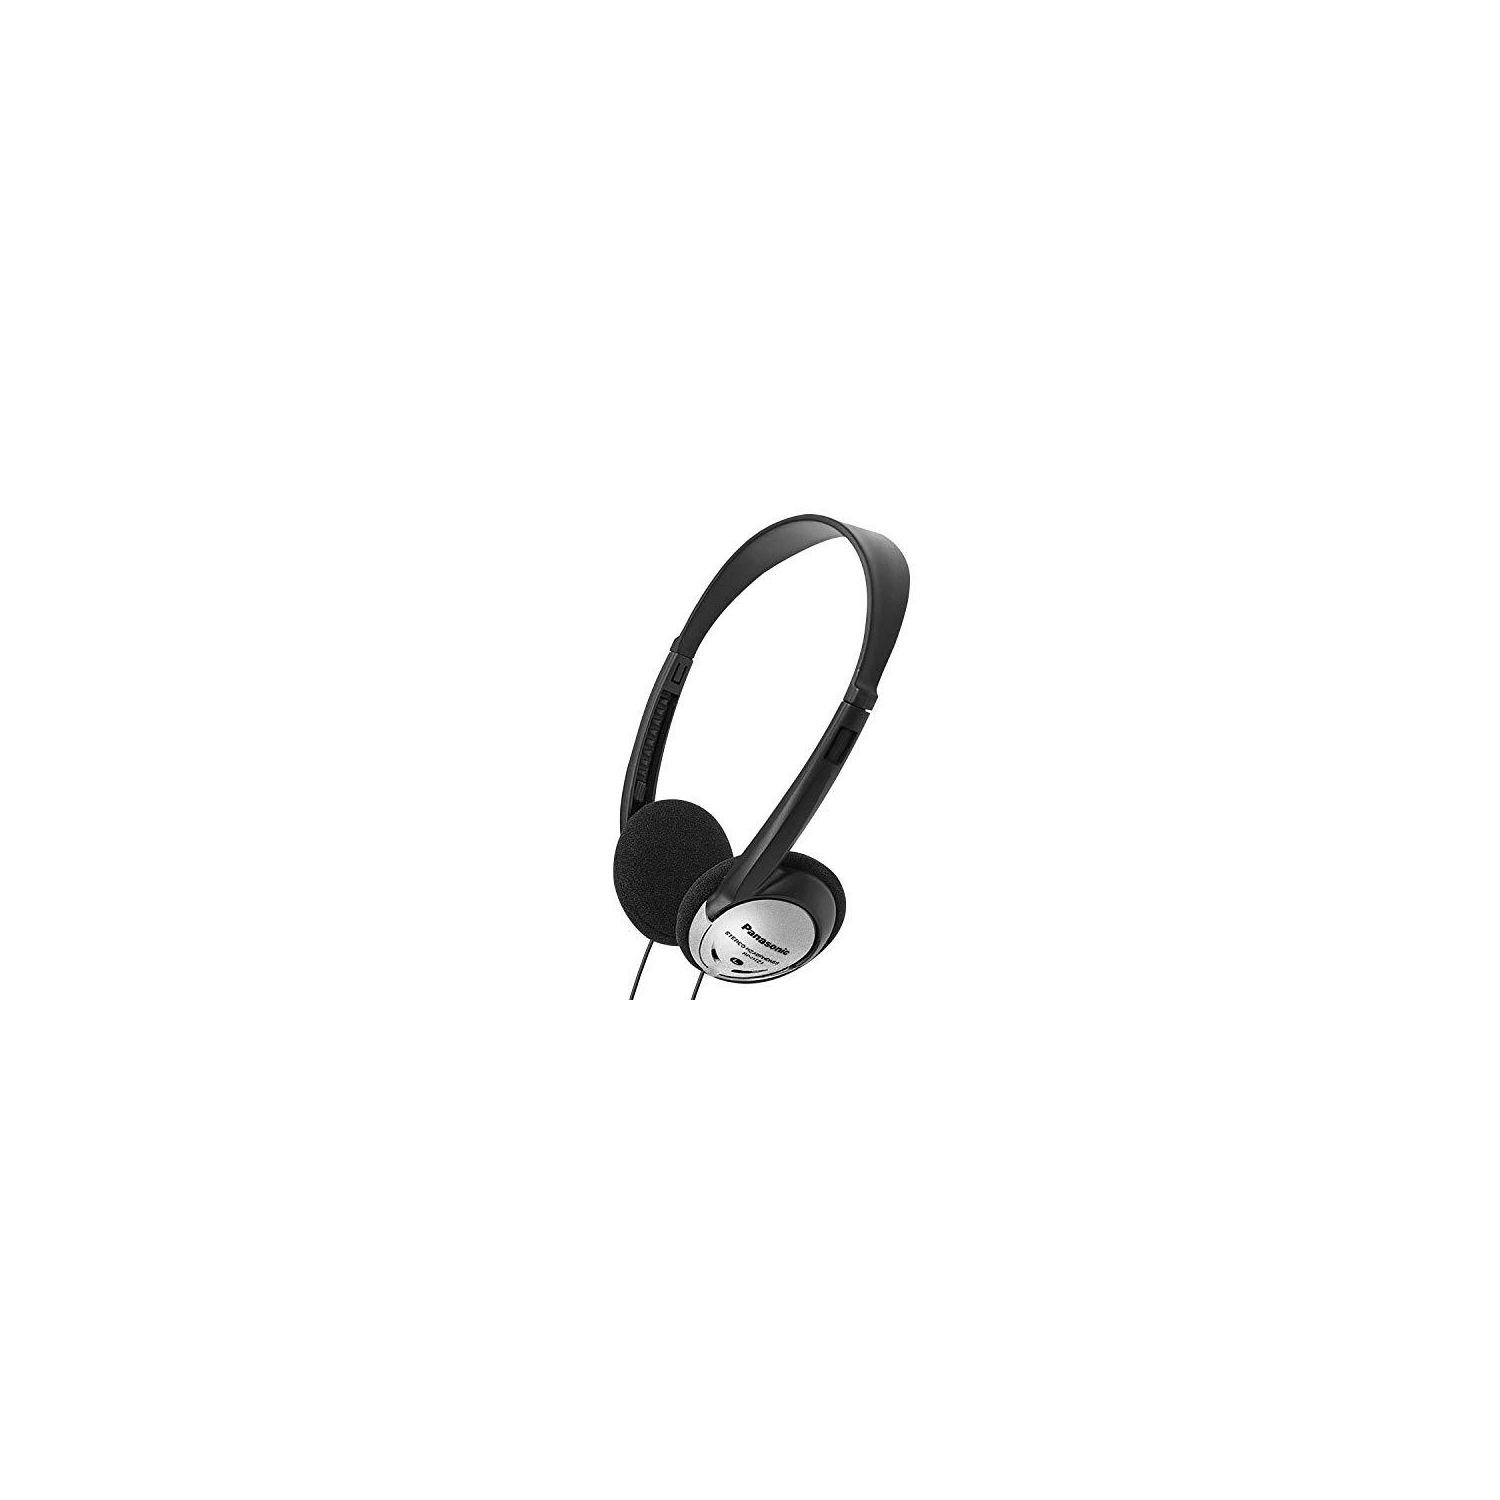 Panasonic RP-HT21 Lightweight Headphones with XBS